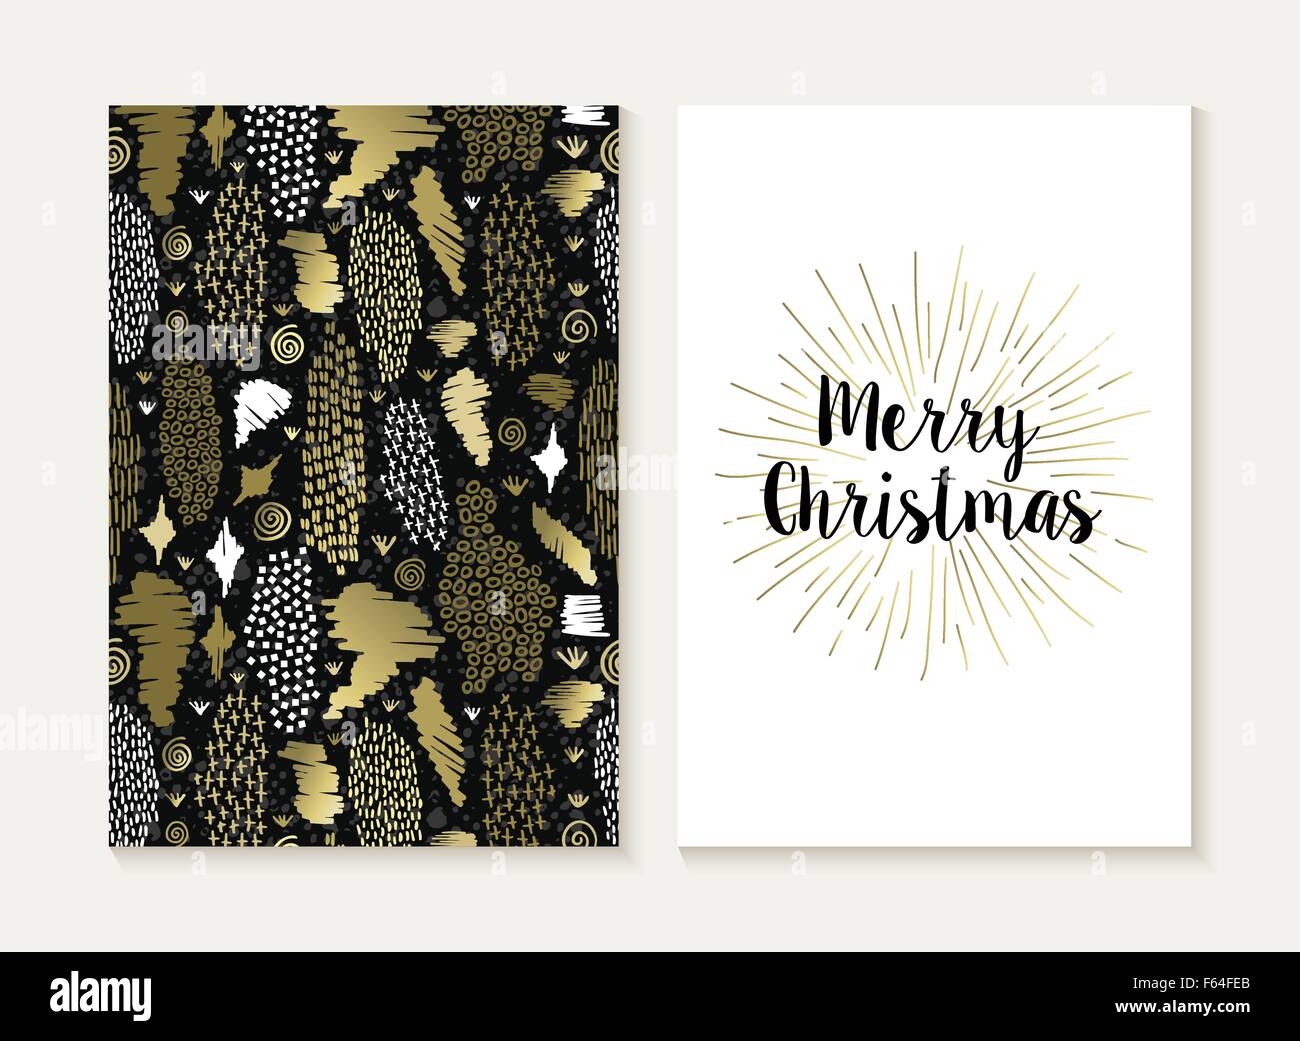 Merry Christmas Card Template set mit Retro-tribal Style nahtlose Muster und trendige Xmas Text in gold metallic-Farbe. Stock Vektor